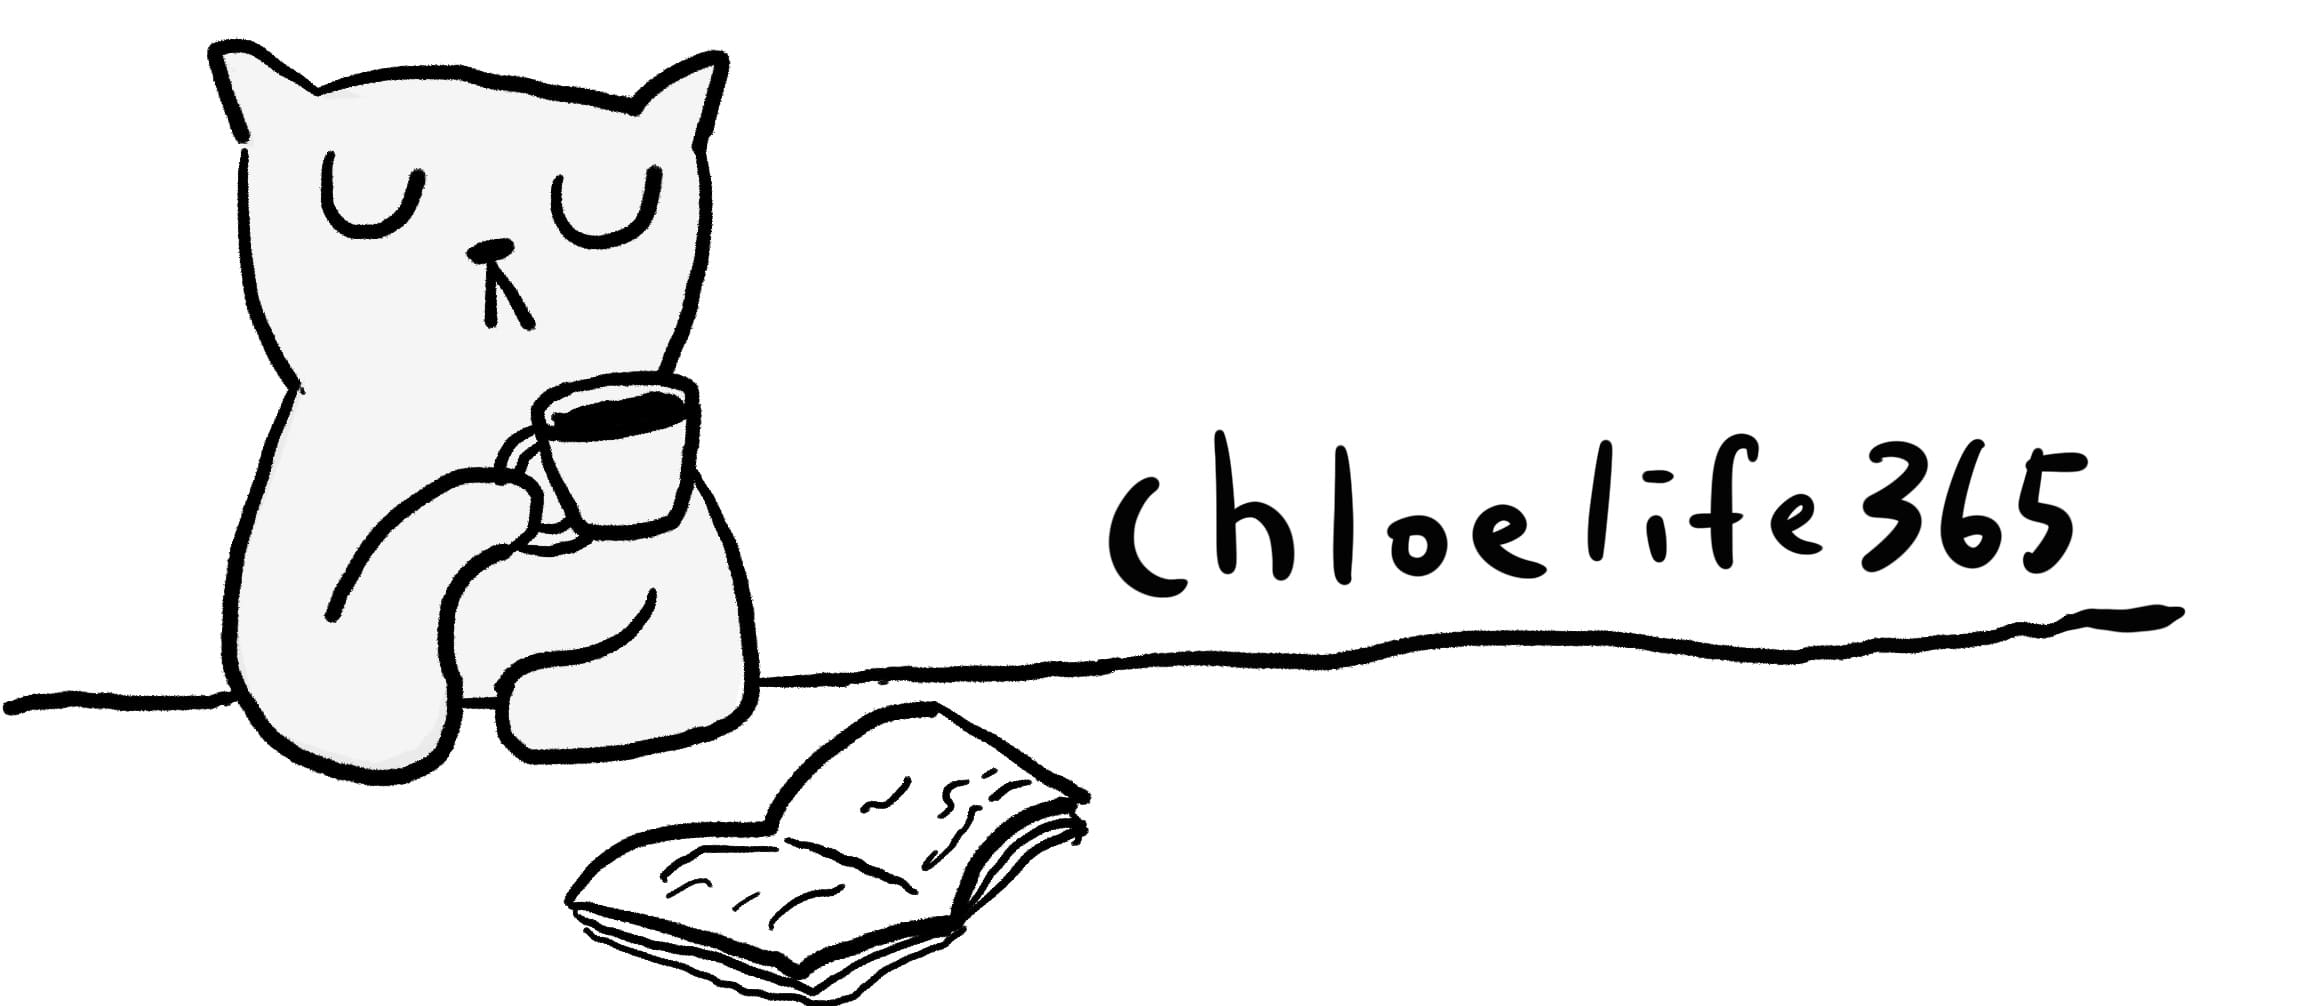 克洛依。Chloe Life 365